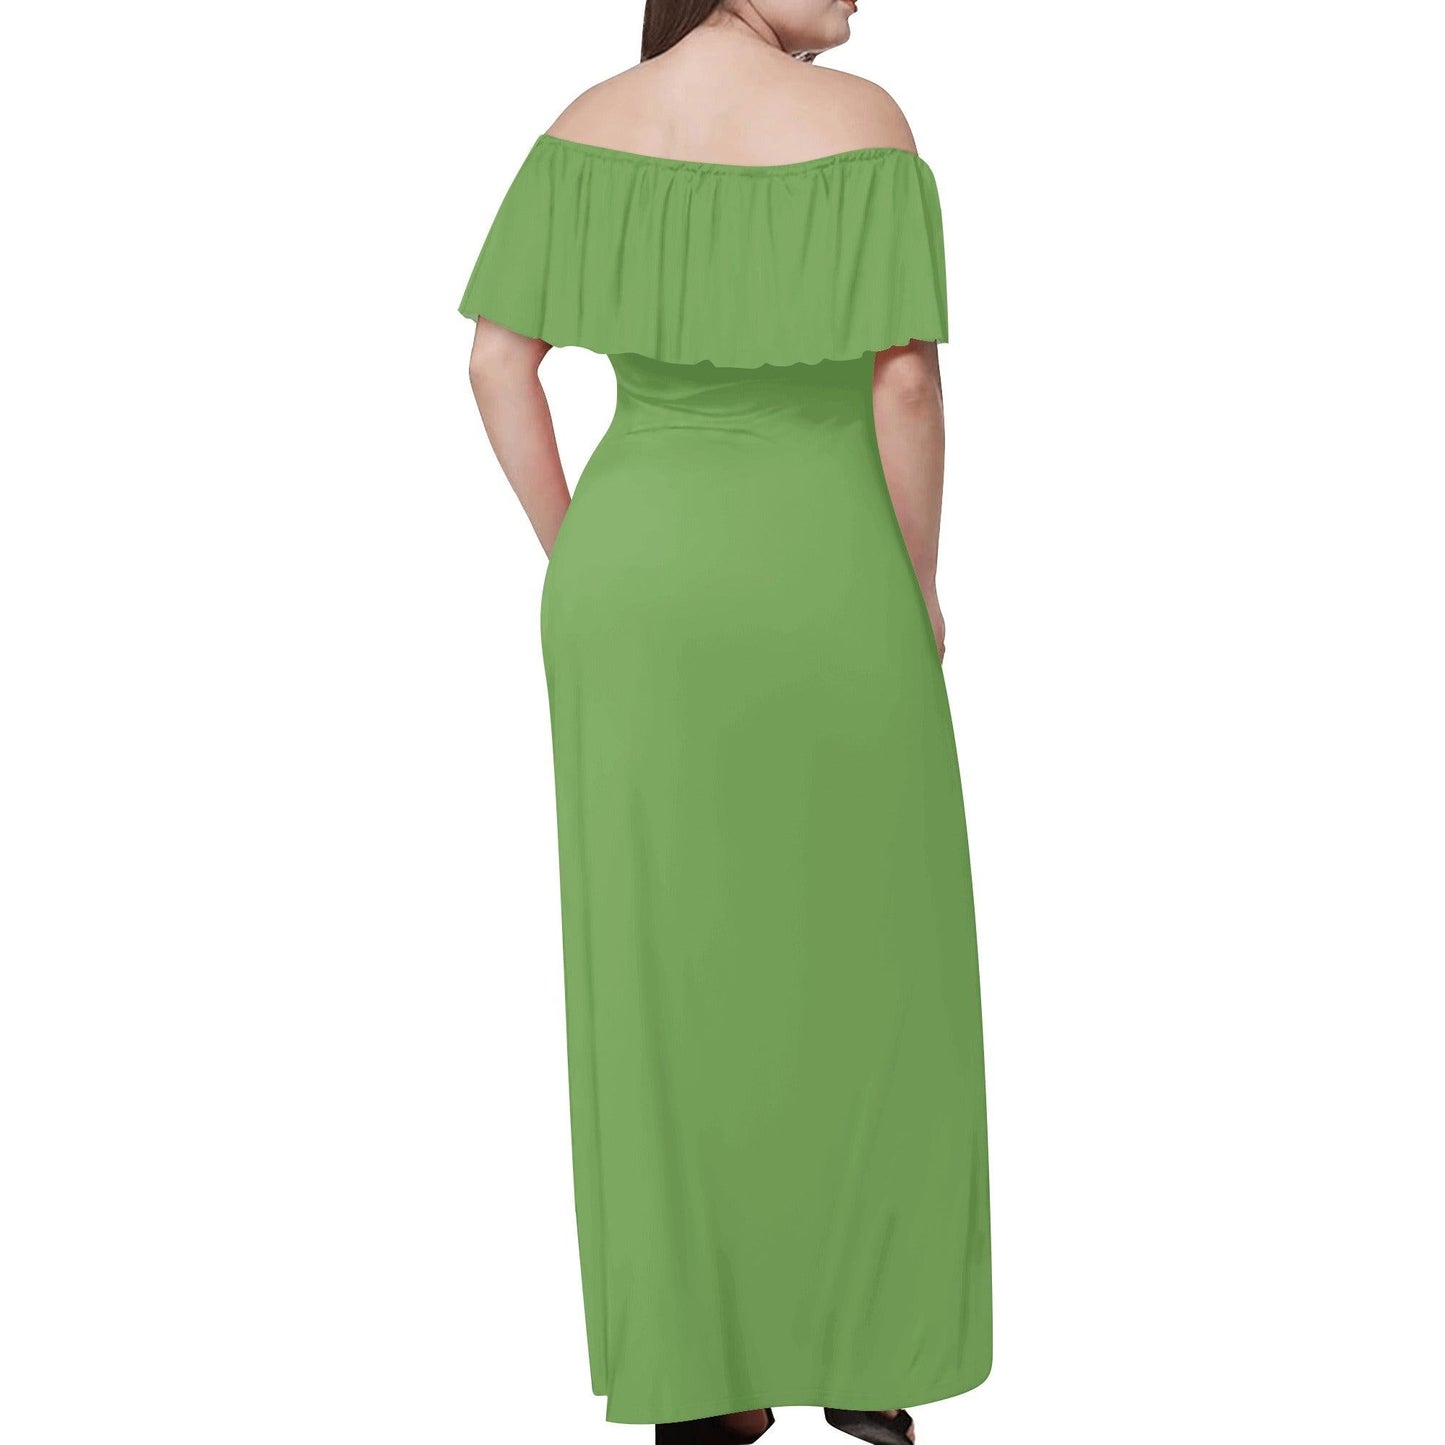 Langes schulterfreies grünes Kleid mit lockerem Oberteil Off-Shoulder-Kleid 73.99 grün, Kleid, Lang, locker, Oberteil, Schulterfrei JLR Design